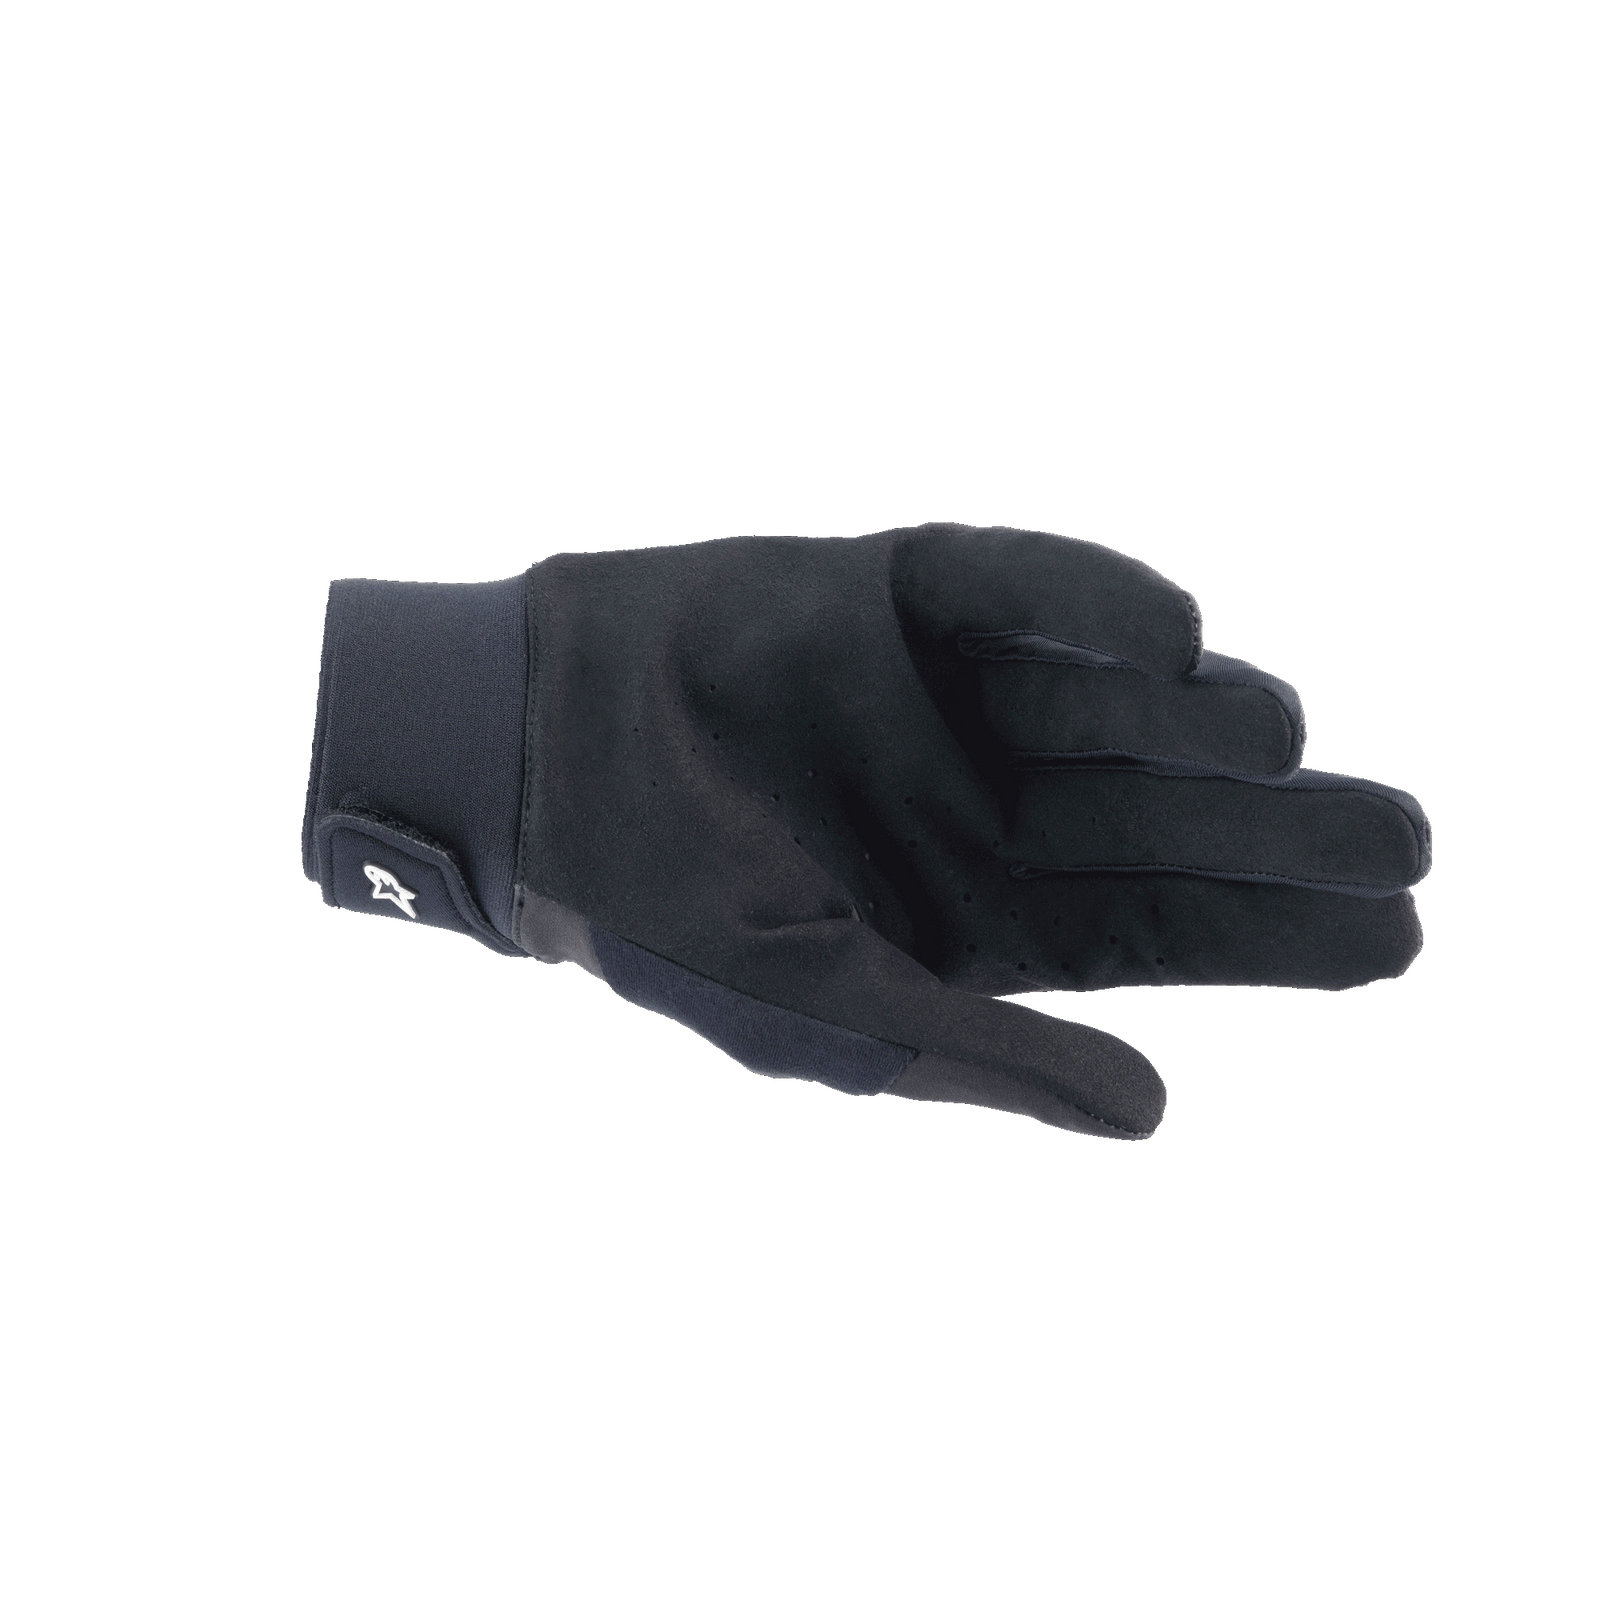 A-Supra Gloves